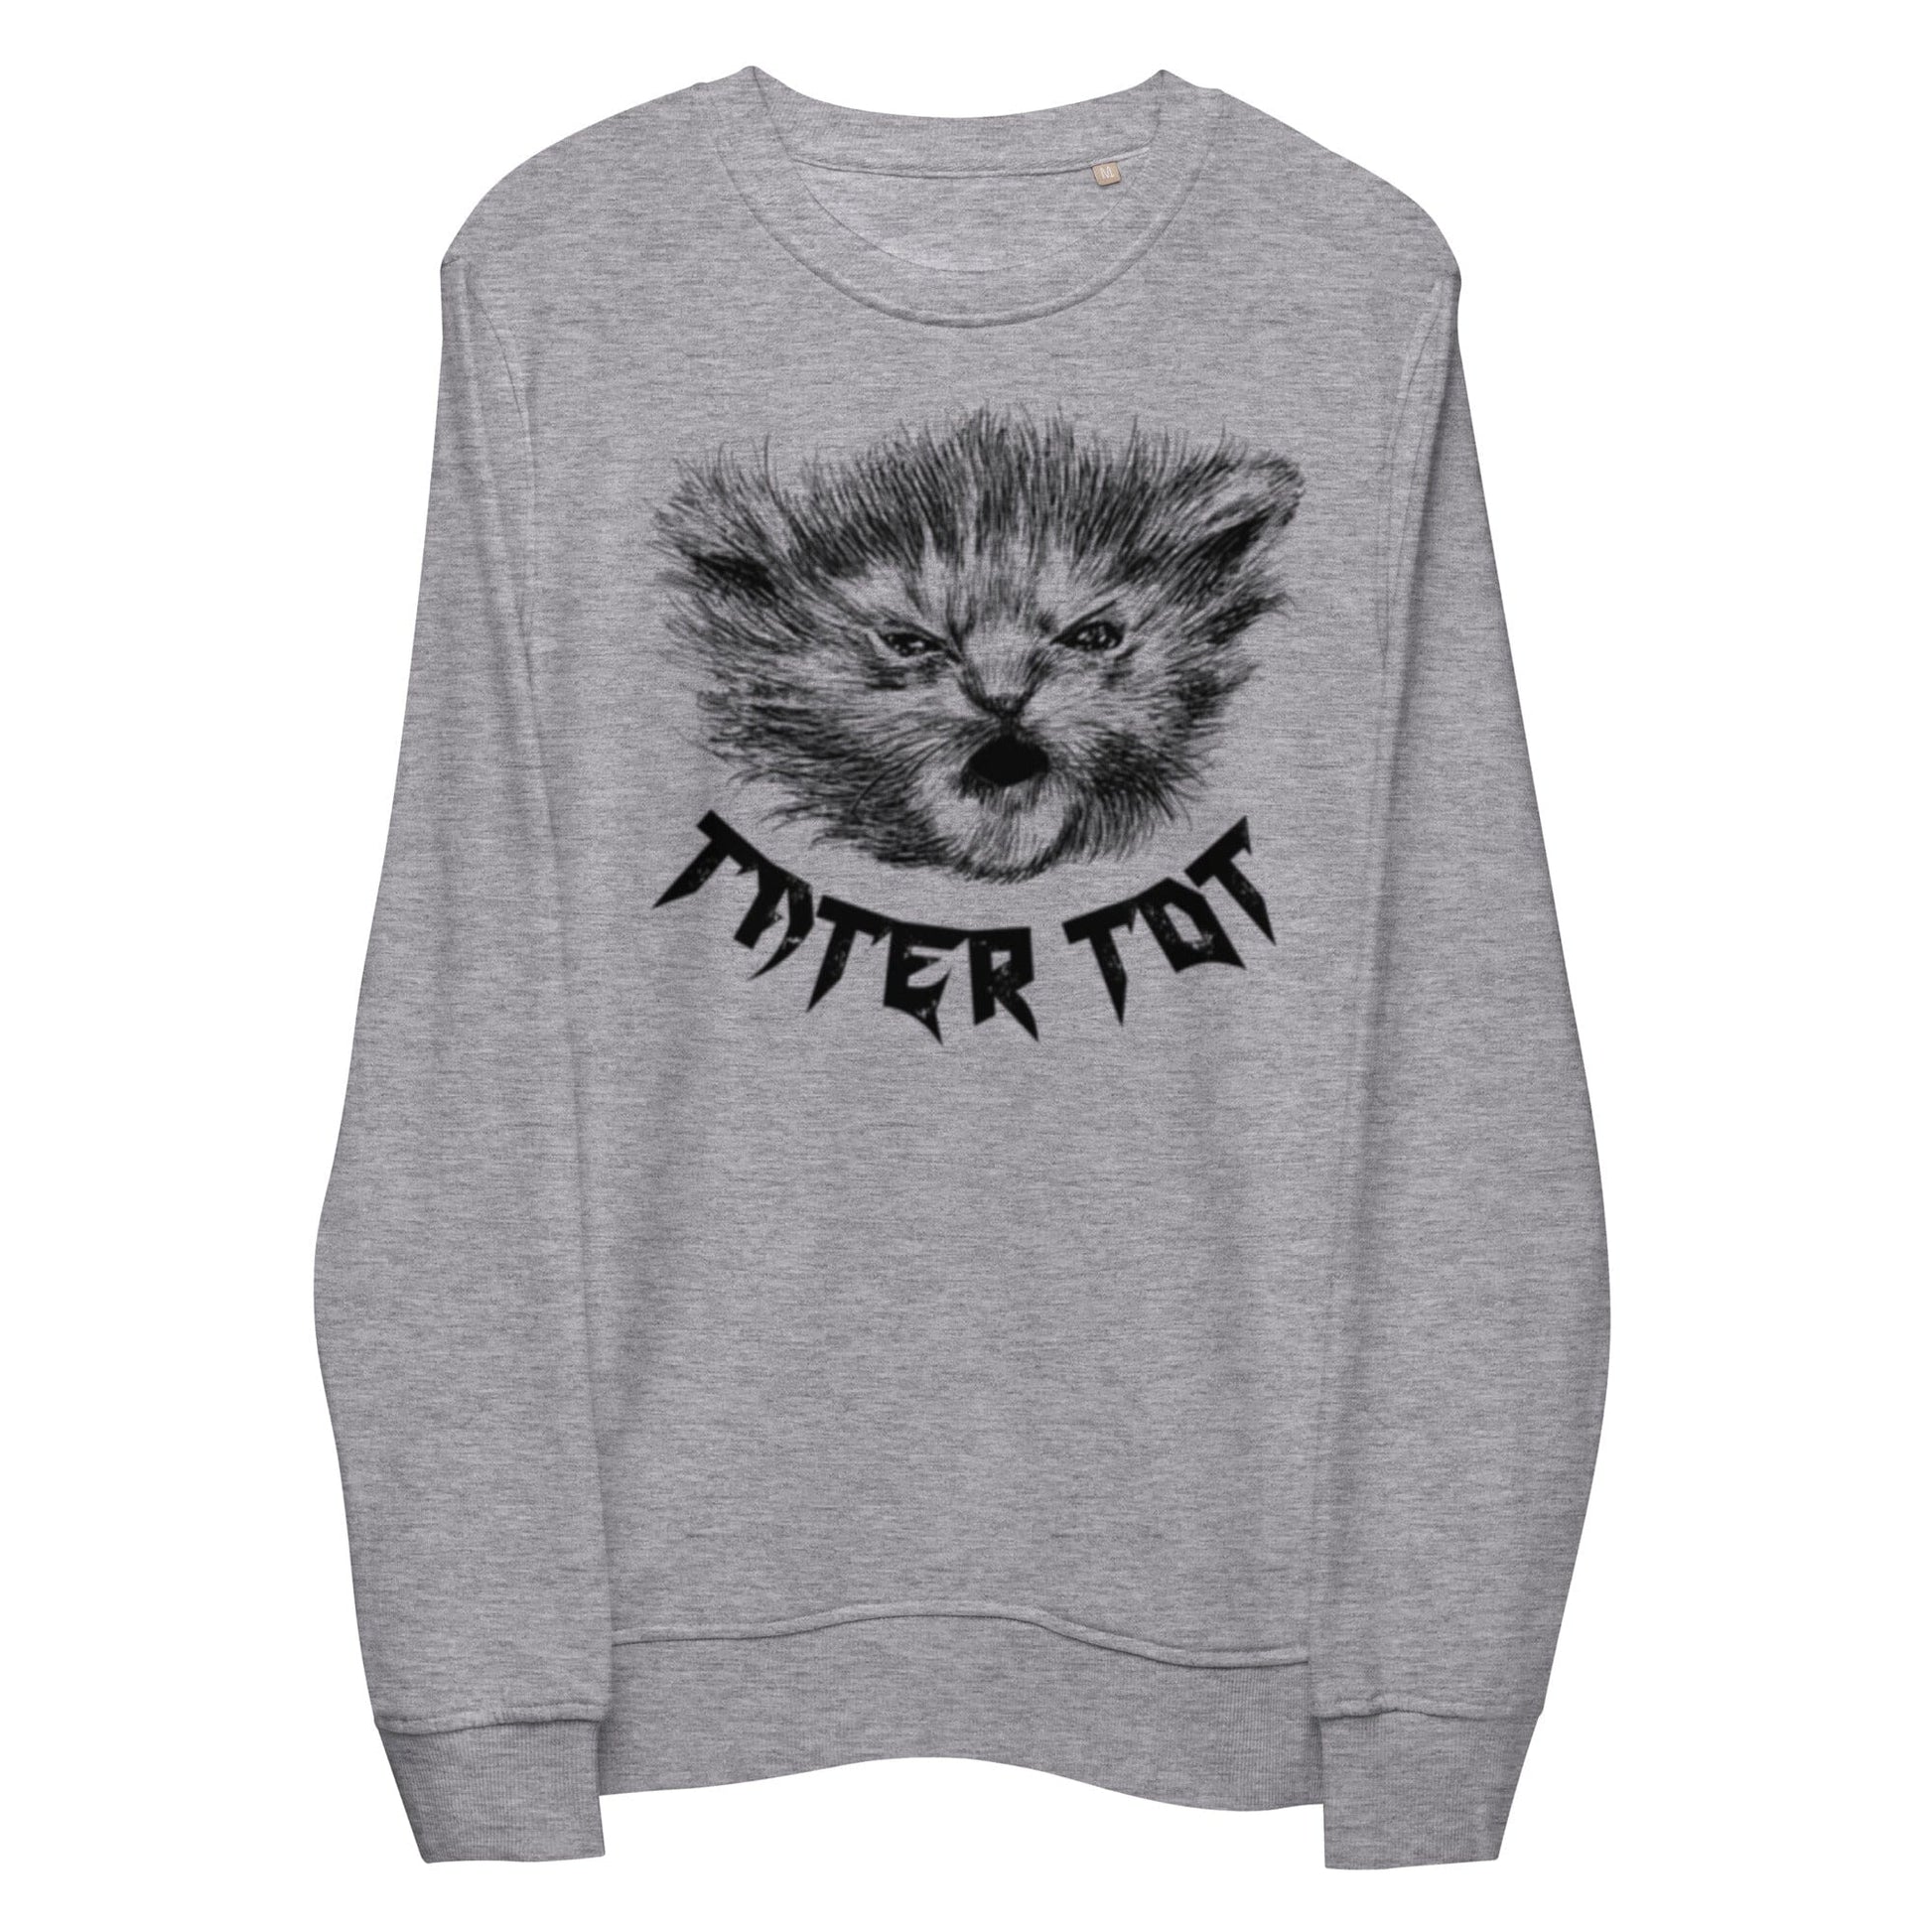 Metal Tater Tot Sweatshirt [Unfoiled] (All net proceeds go to Kitty CrusAIDe) JoyousJoyfulJoyness Grey Melange S 